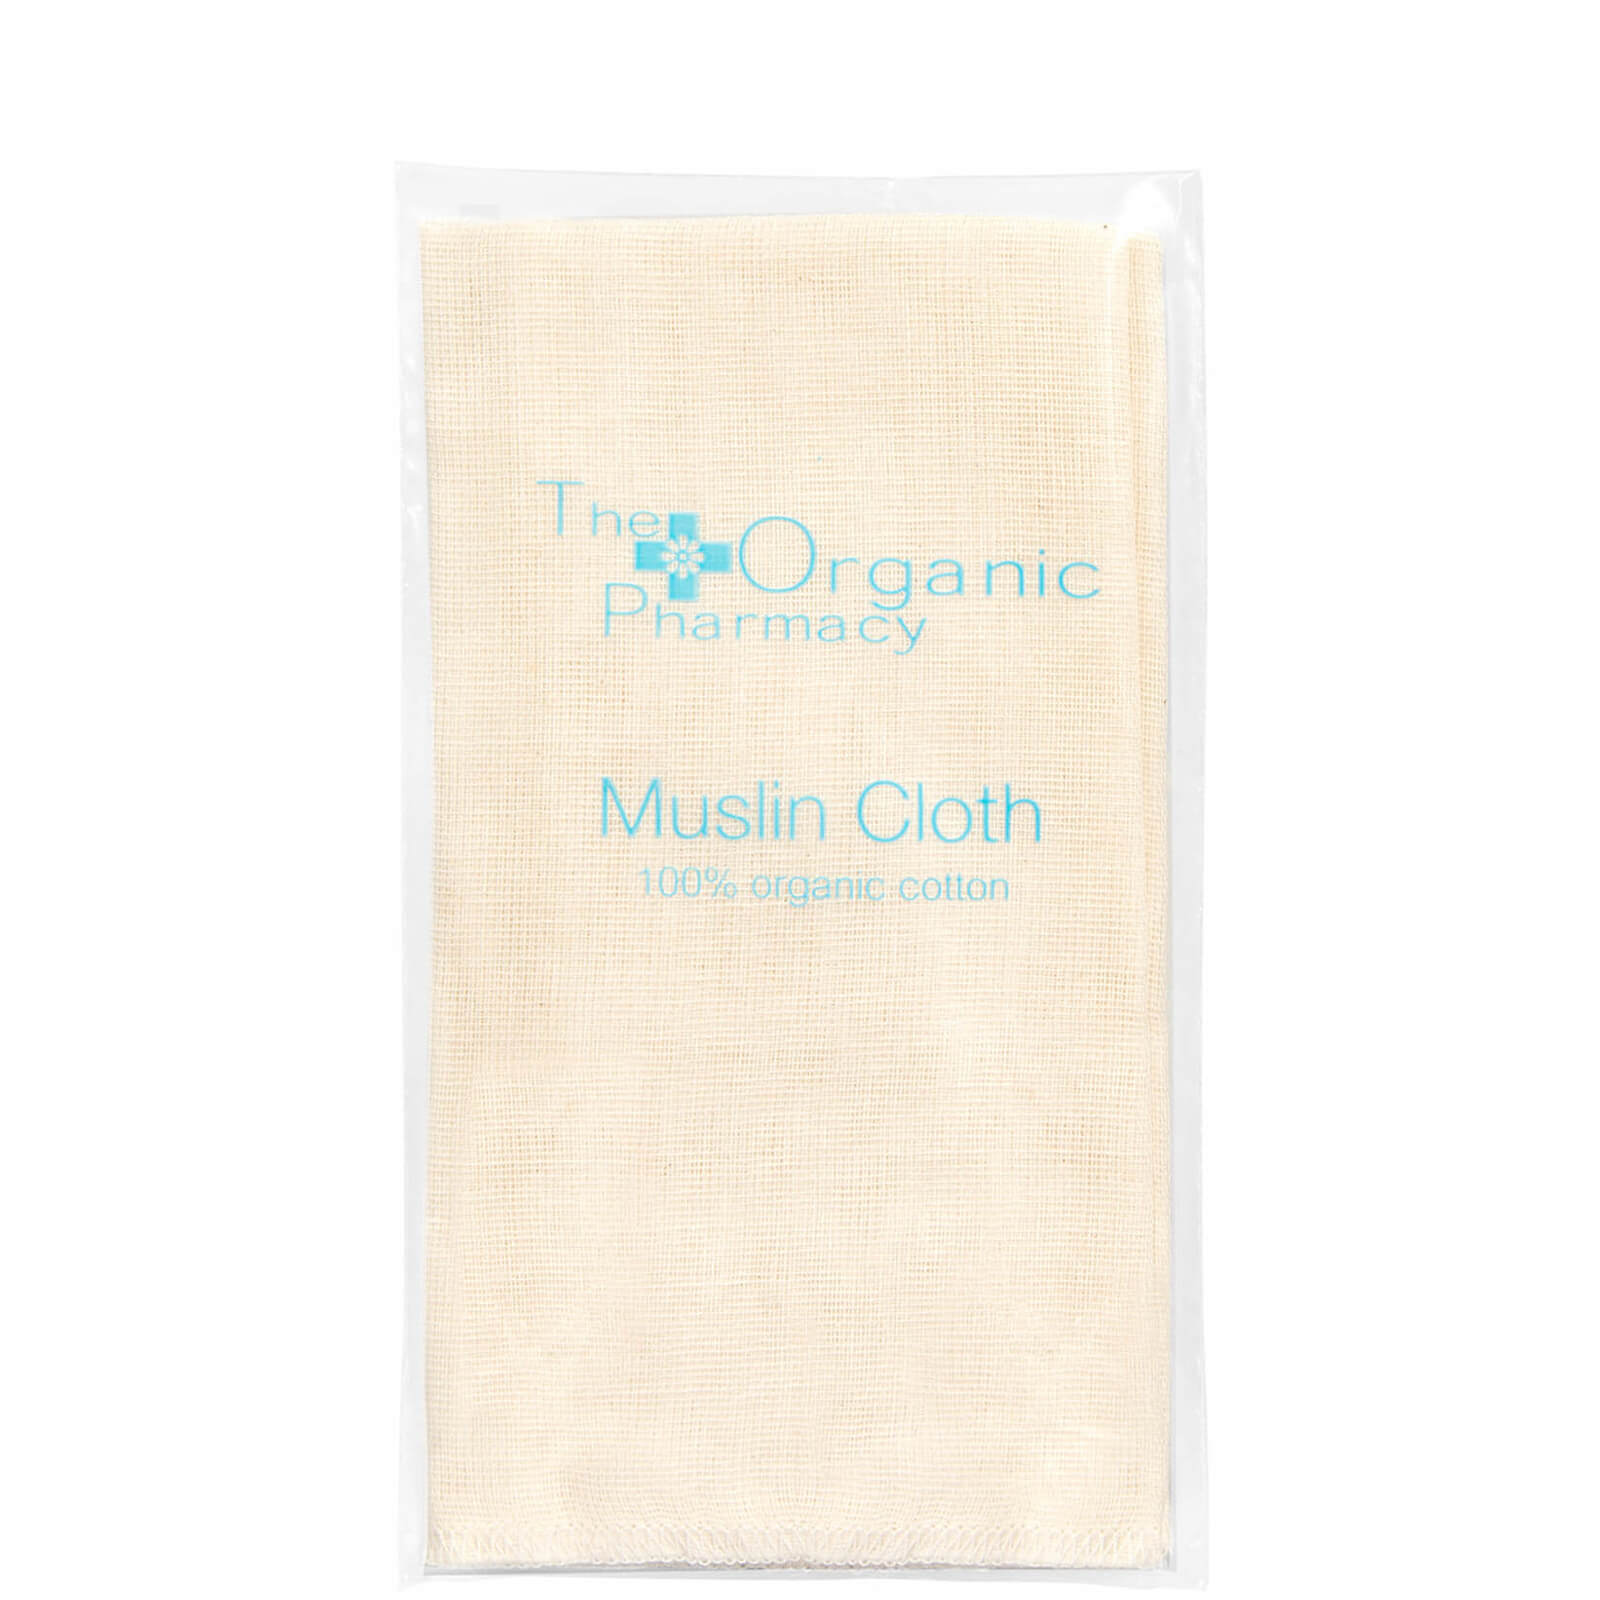 Image of The Organic Pharmacy Organic Muslin Cloth